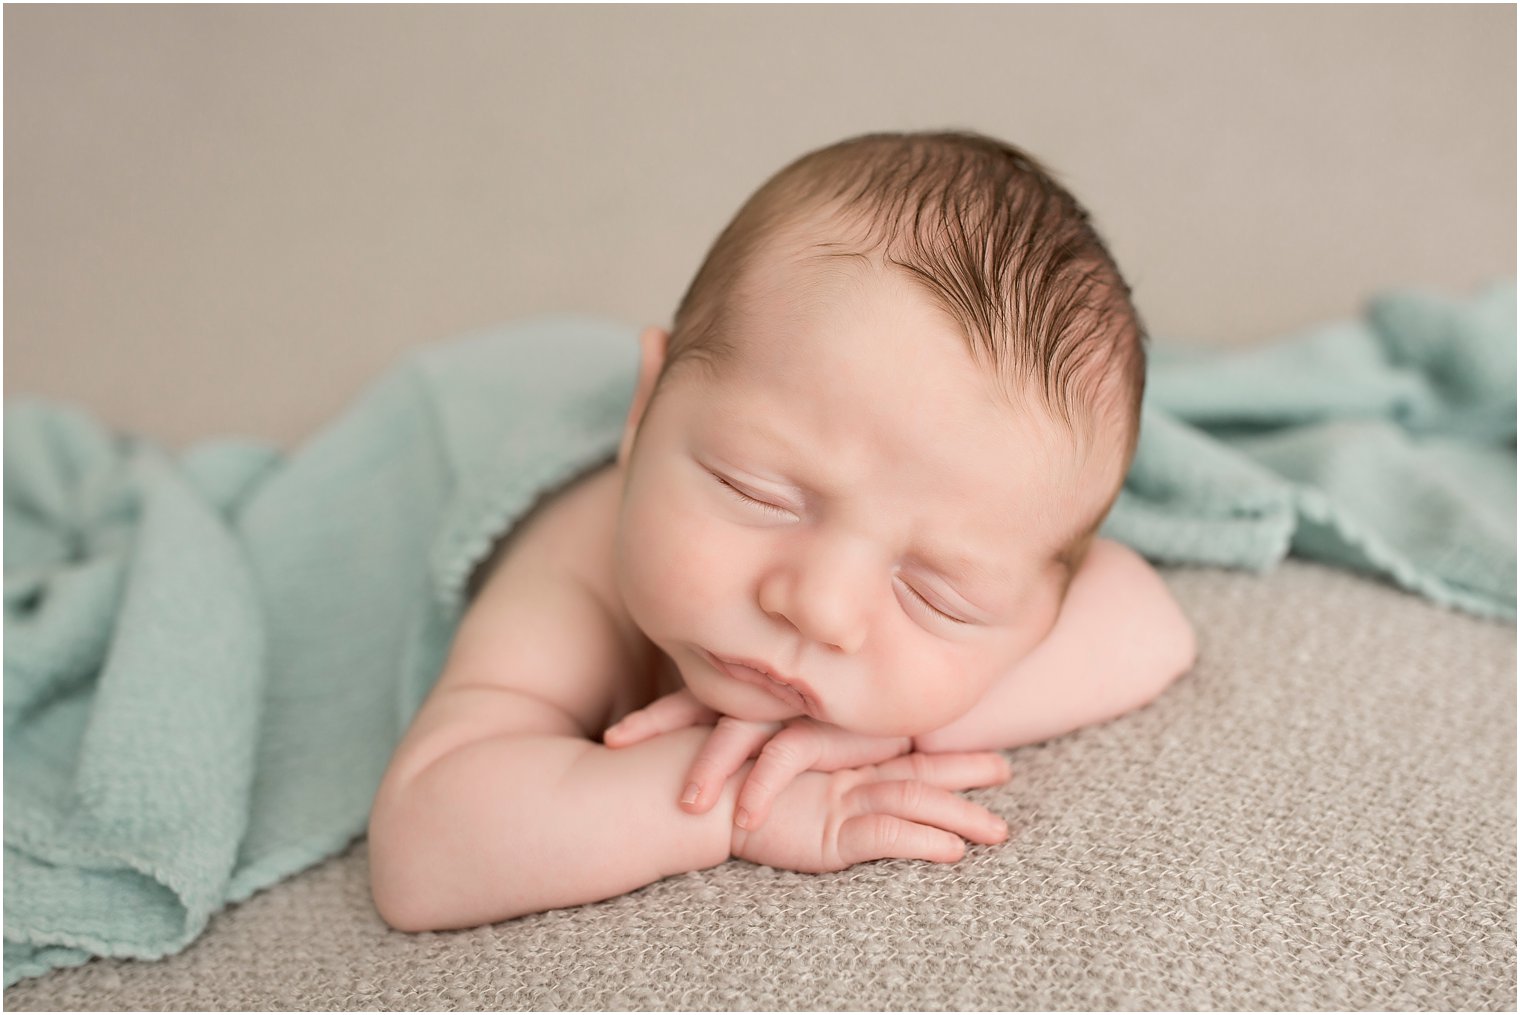 Sleepy newborn boy | Photo by Idalia Photography